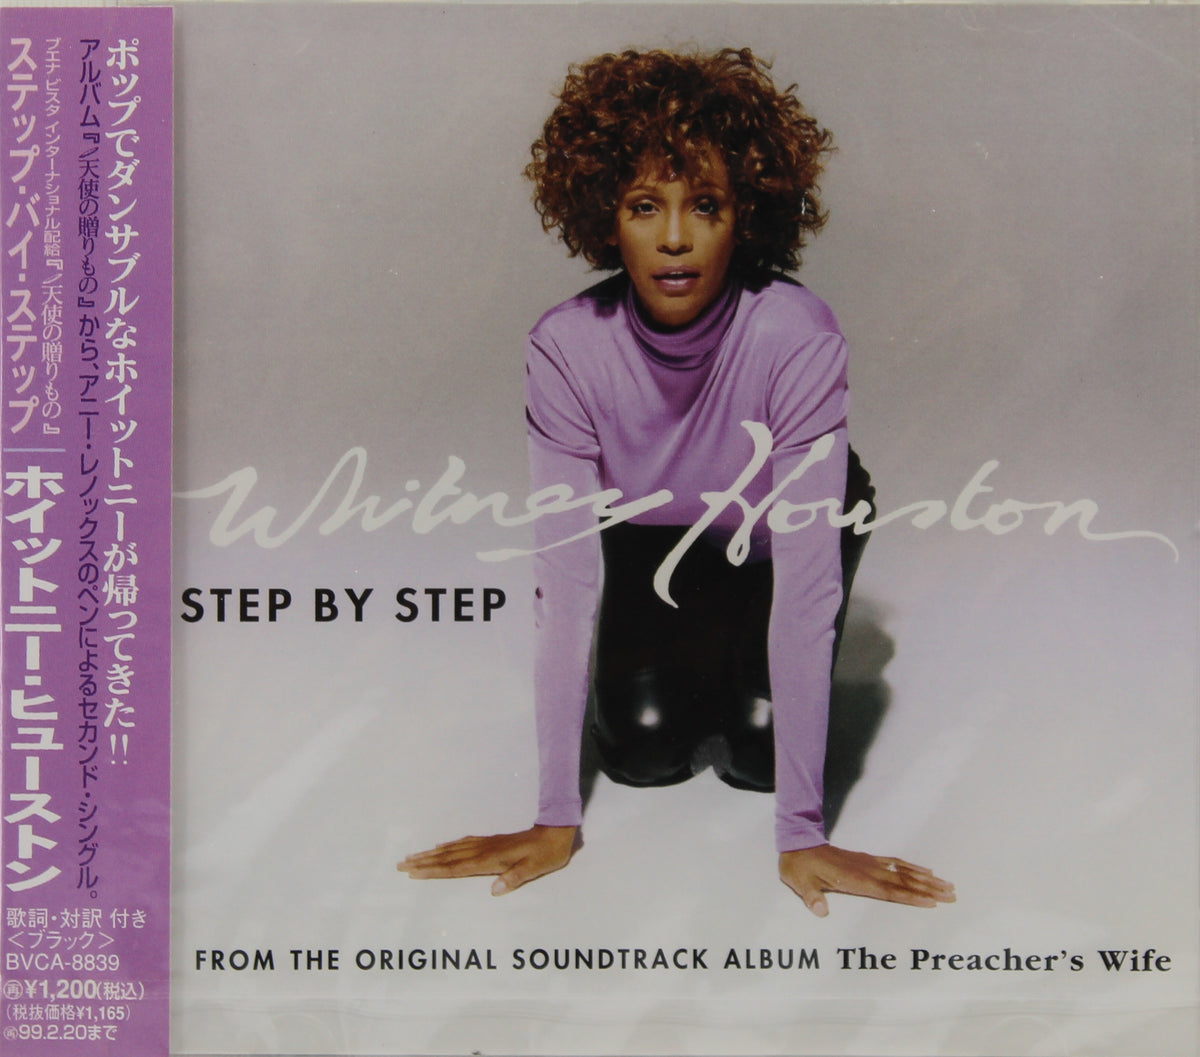 Whitney Houston ‎– Step By Step, CD Single, Japan 1997